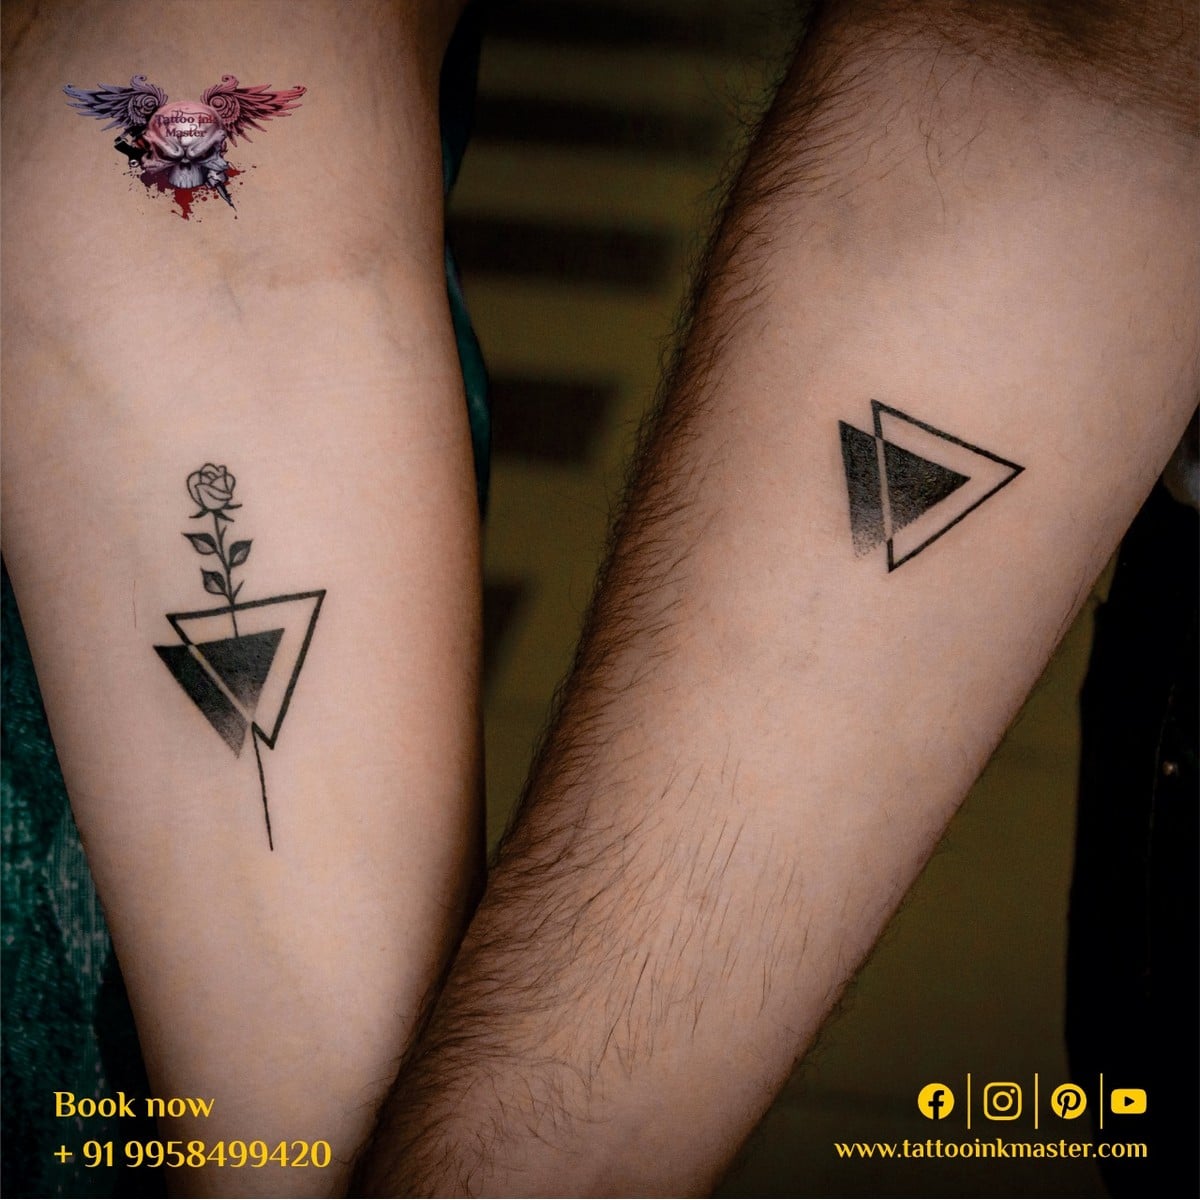 Minimalistic Design Creative Tattoo for Hands | Tattoo Ink Master